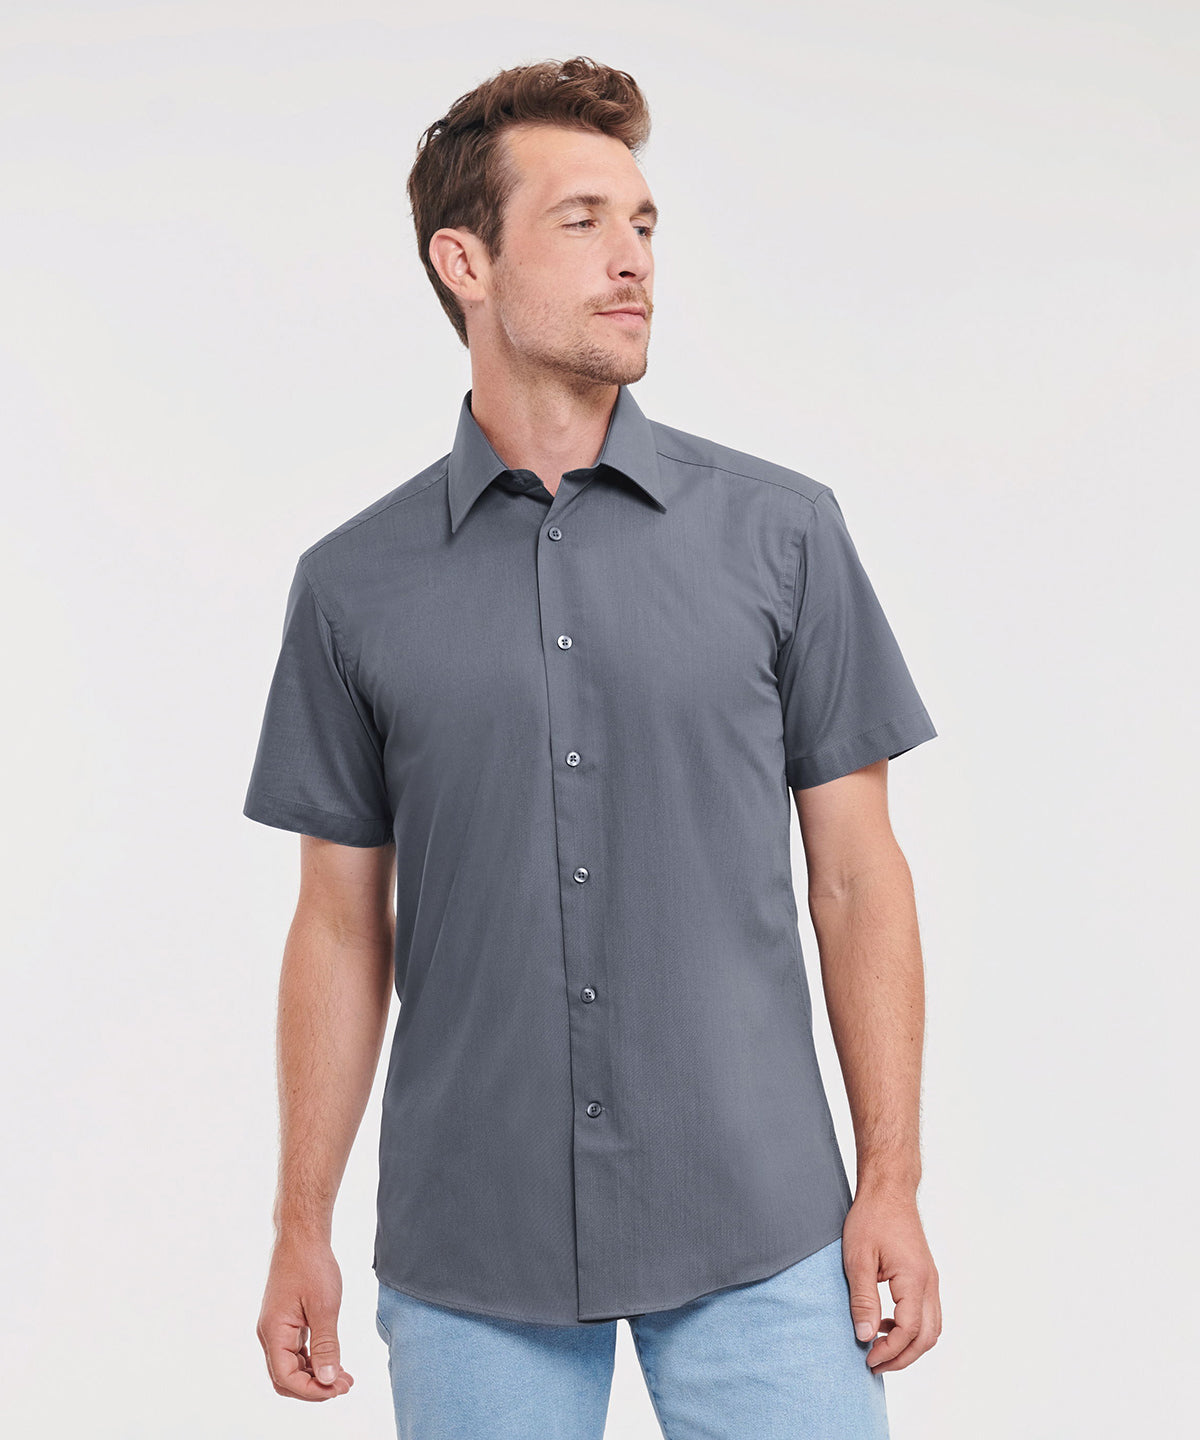 Bolir - Short Sleeve Polycotton Easycare Tailored Poplin Shirt